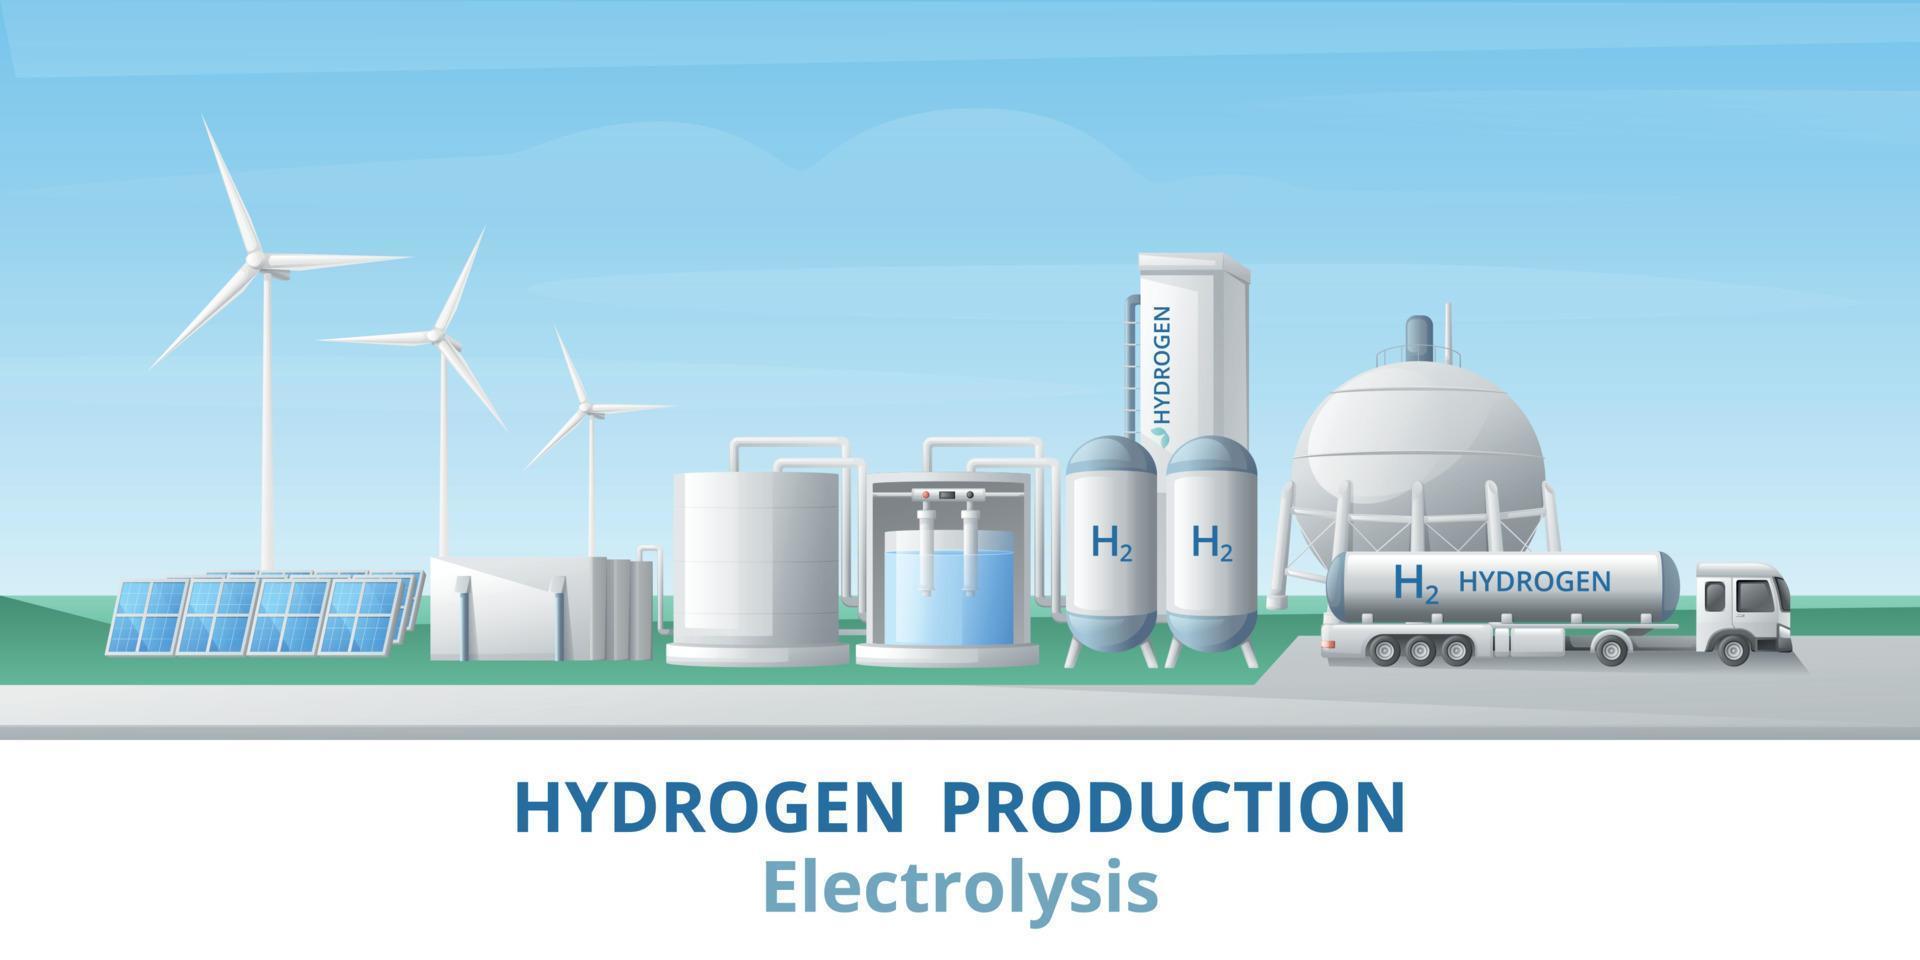 waterstof productie elektrolyse achtergrond vector